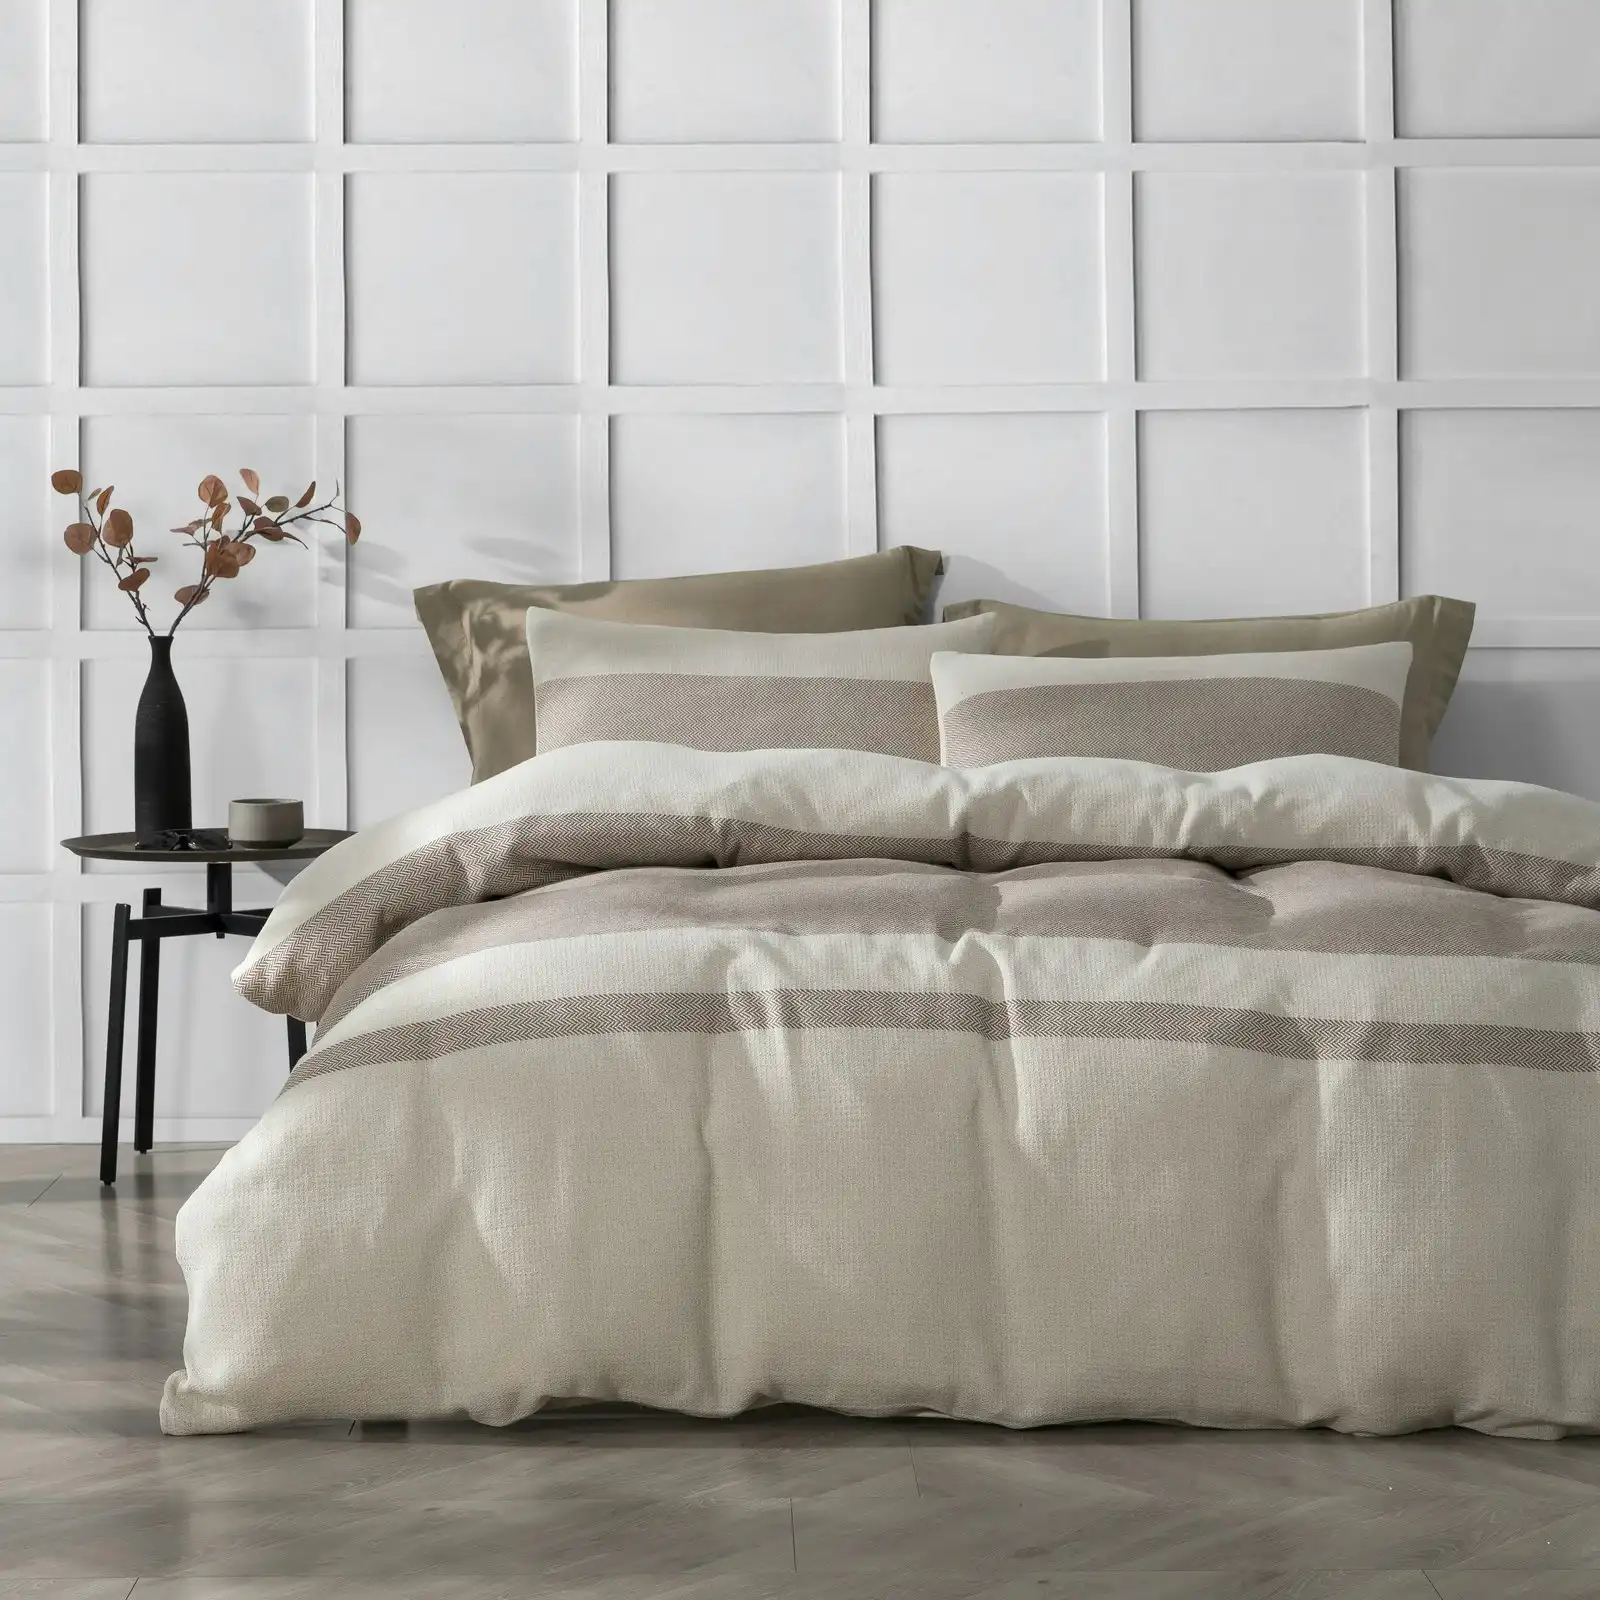 Dreamaker Herringbone 100% Cotton Quilt Cover Set Natural - Cream King Bed